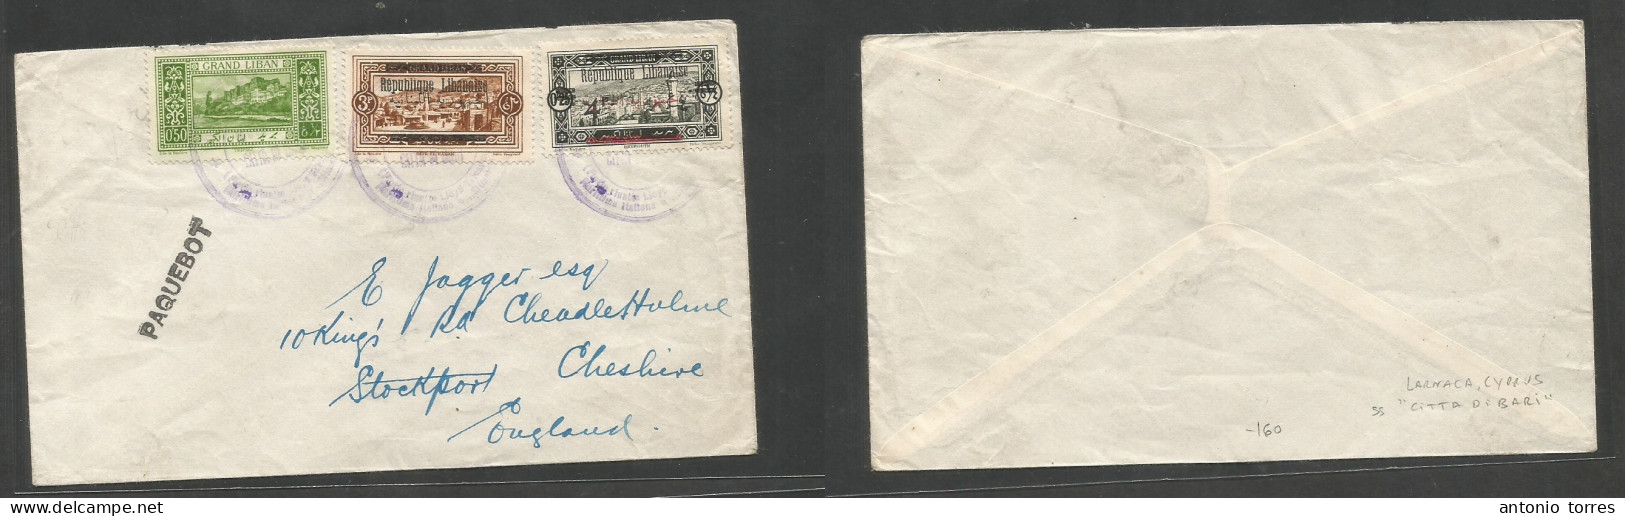 Lebanon. C. 1928. Multifkd Pqbt Mail Envelope To Stockport, England, Lilac Cachet "Citta De Bari" Cancelled On Transit A - Libanon